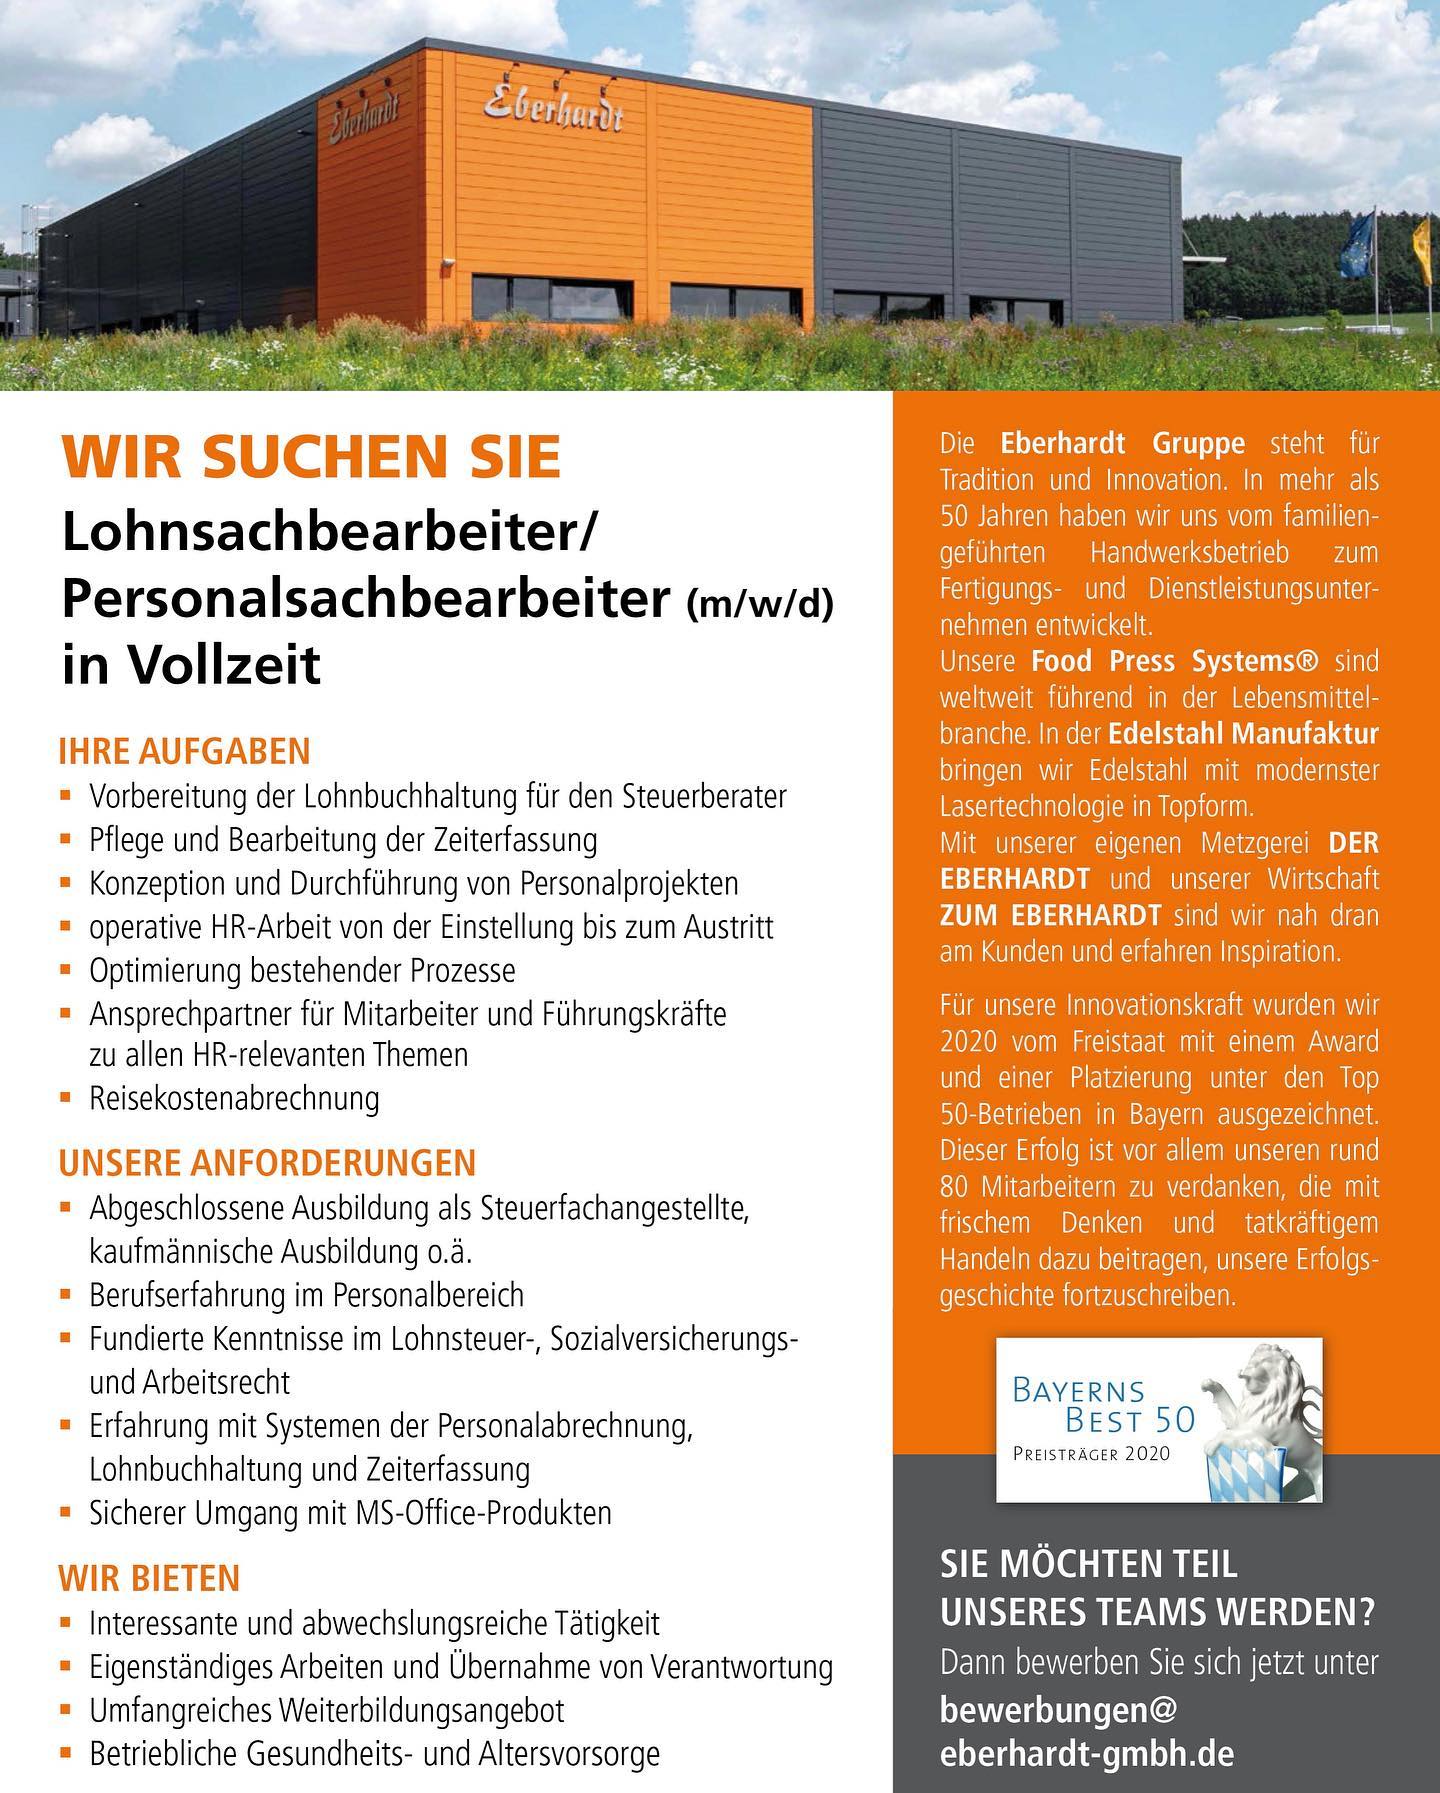 Eberhardt GmbH